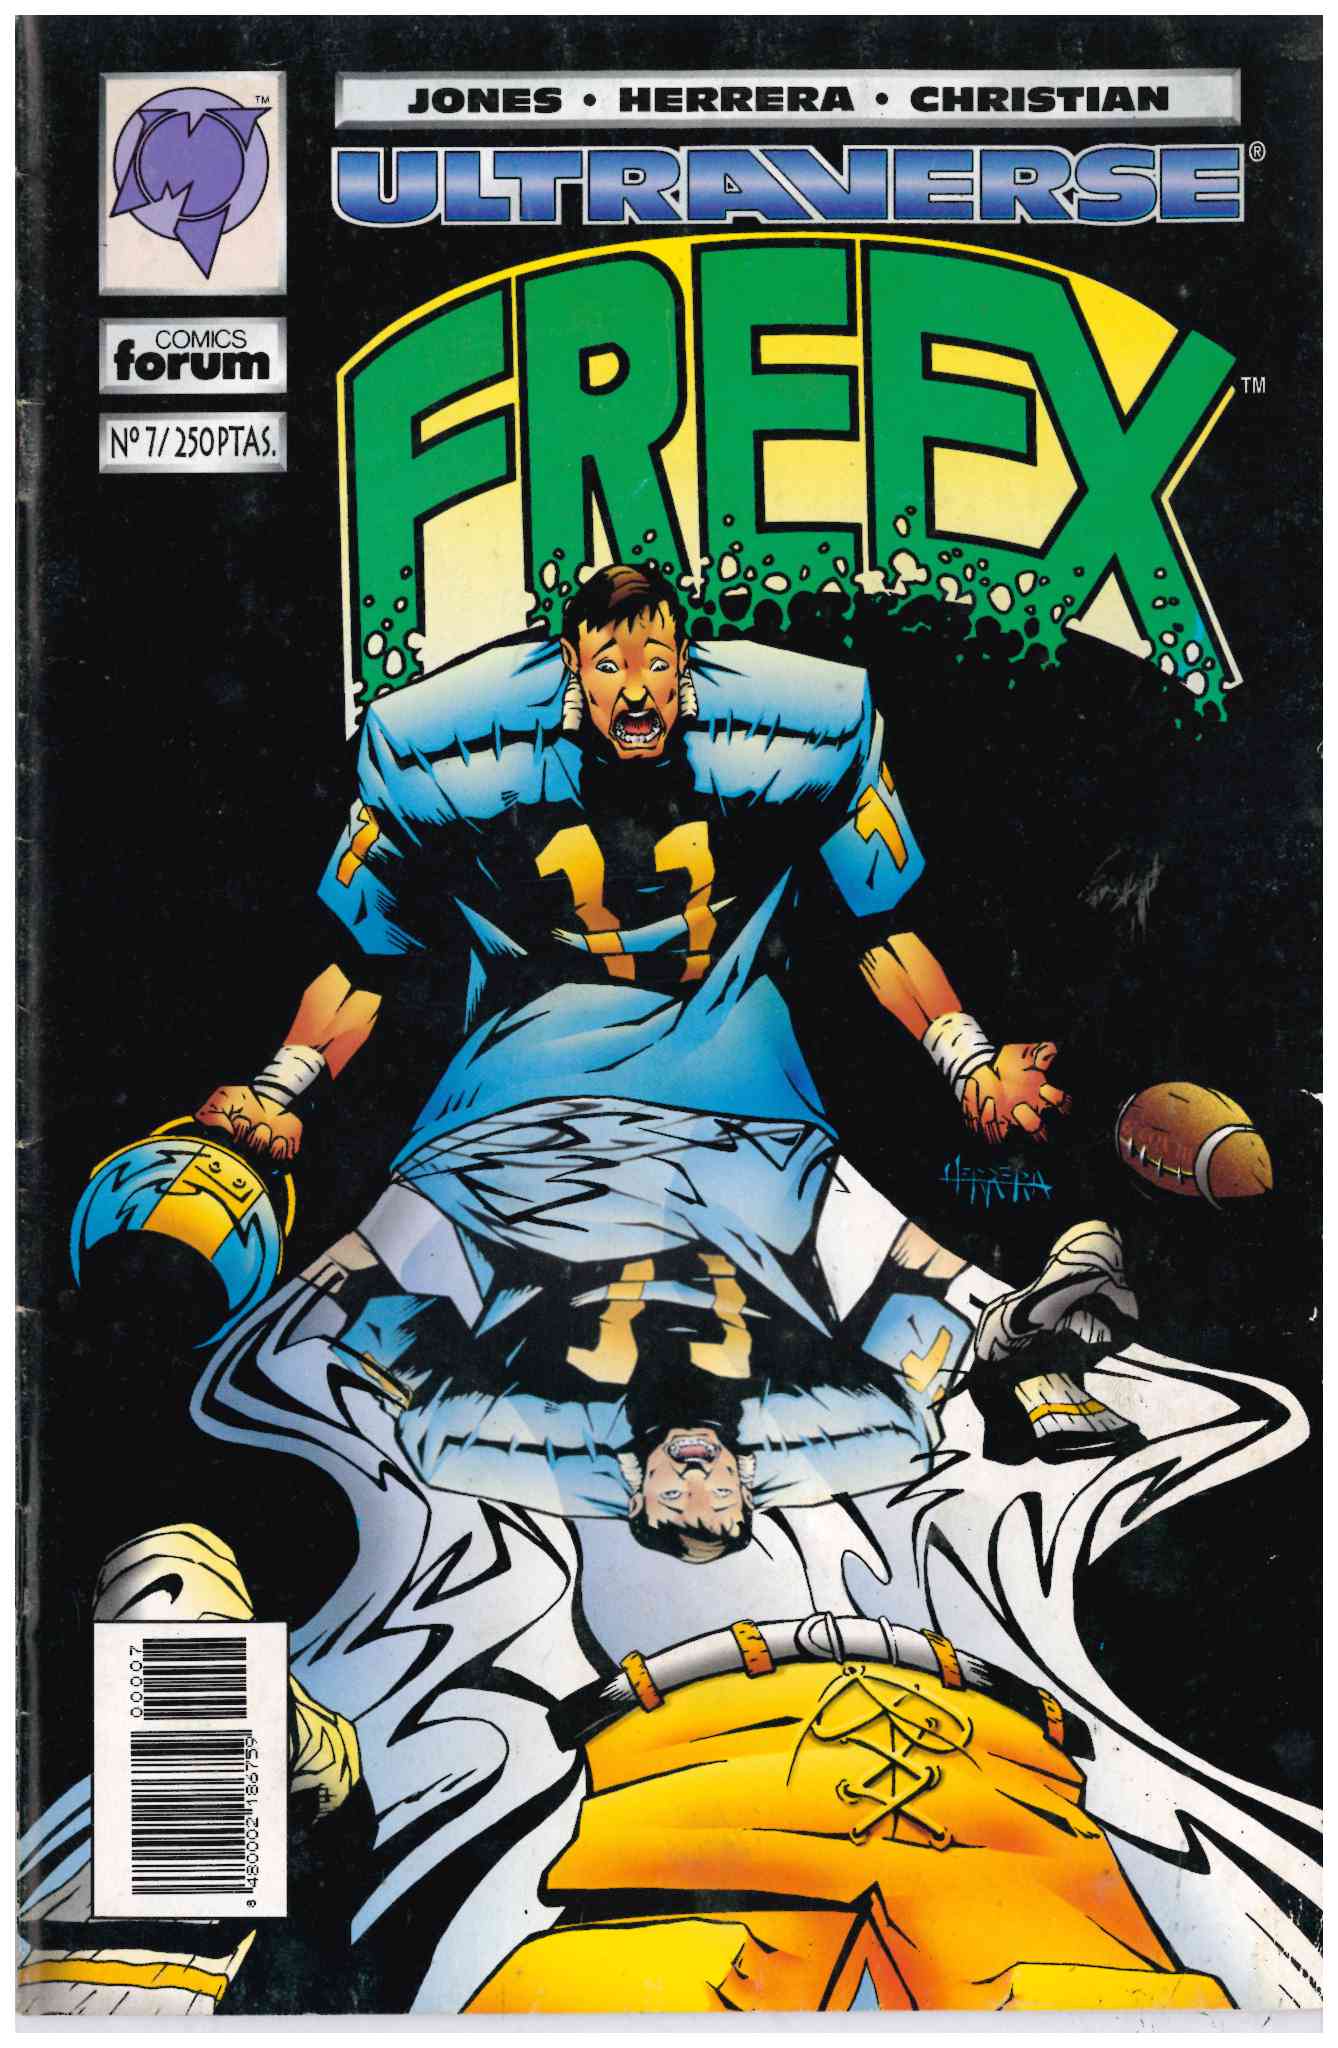 Freex. Ultraverse. Forum 1995. Nº 7